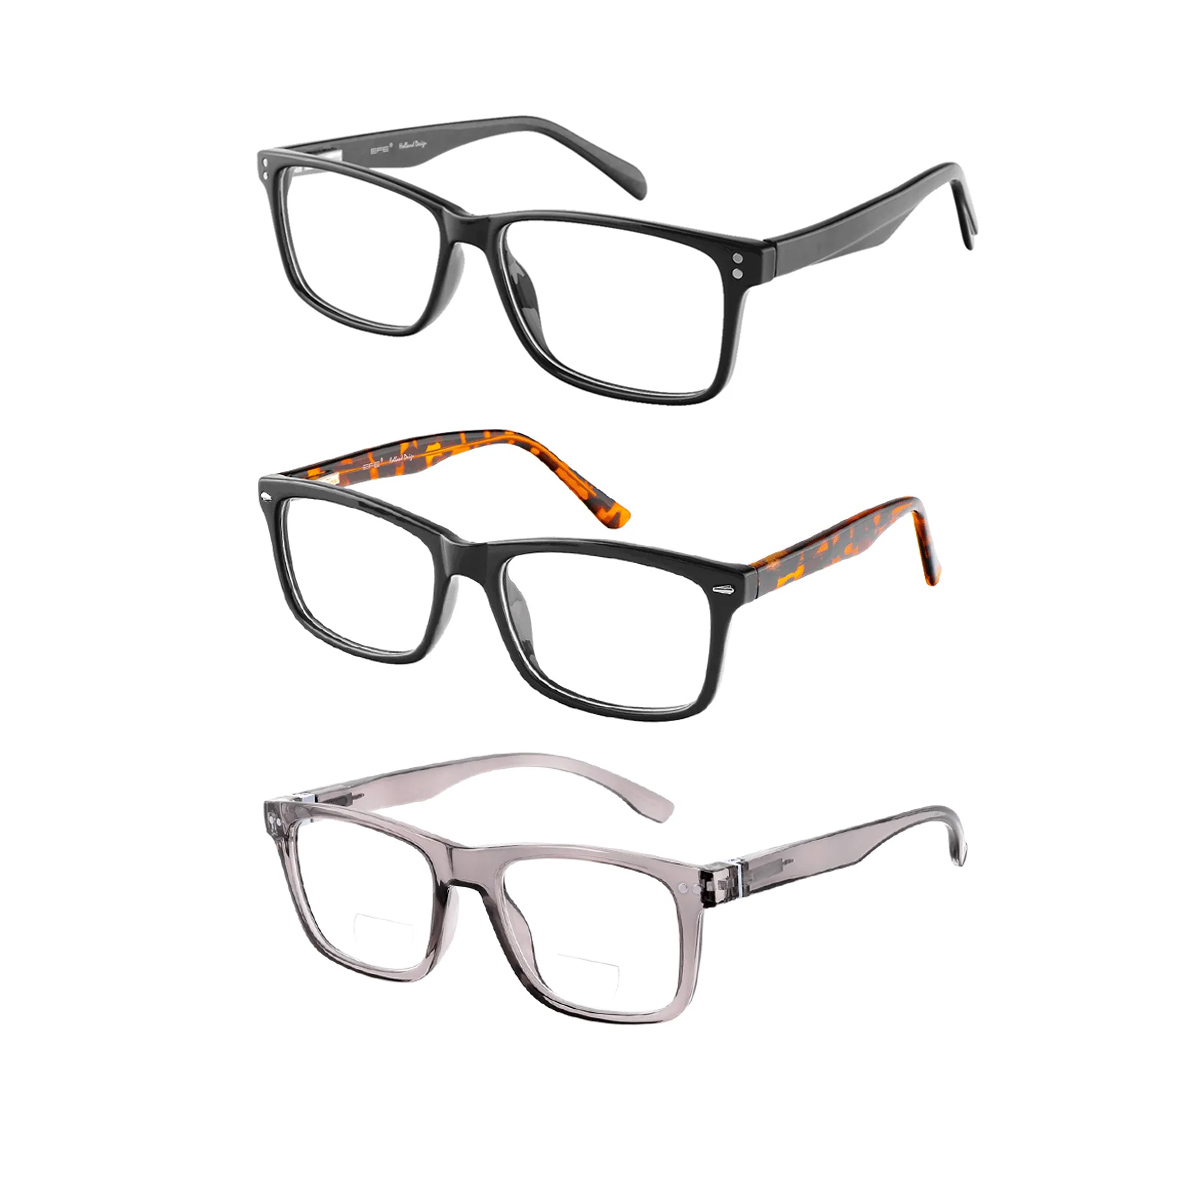 Reading Glasses Collection Oscar $24.99/Set